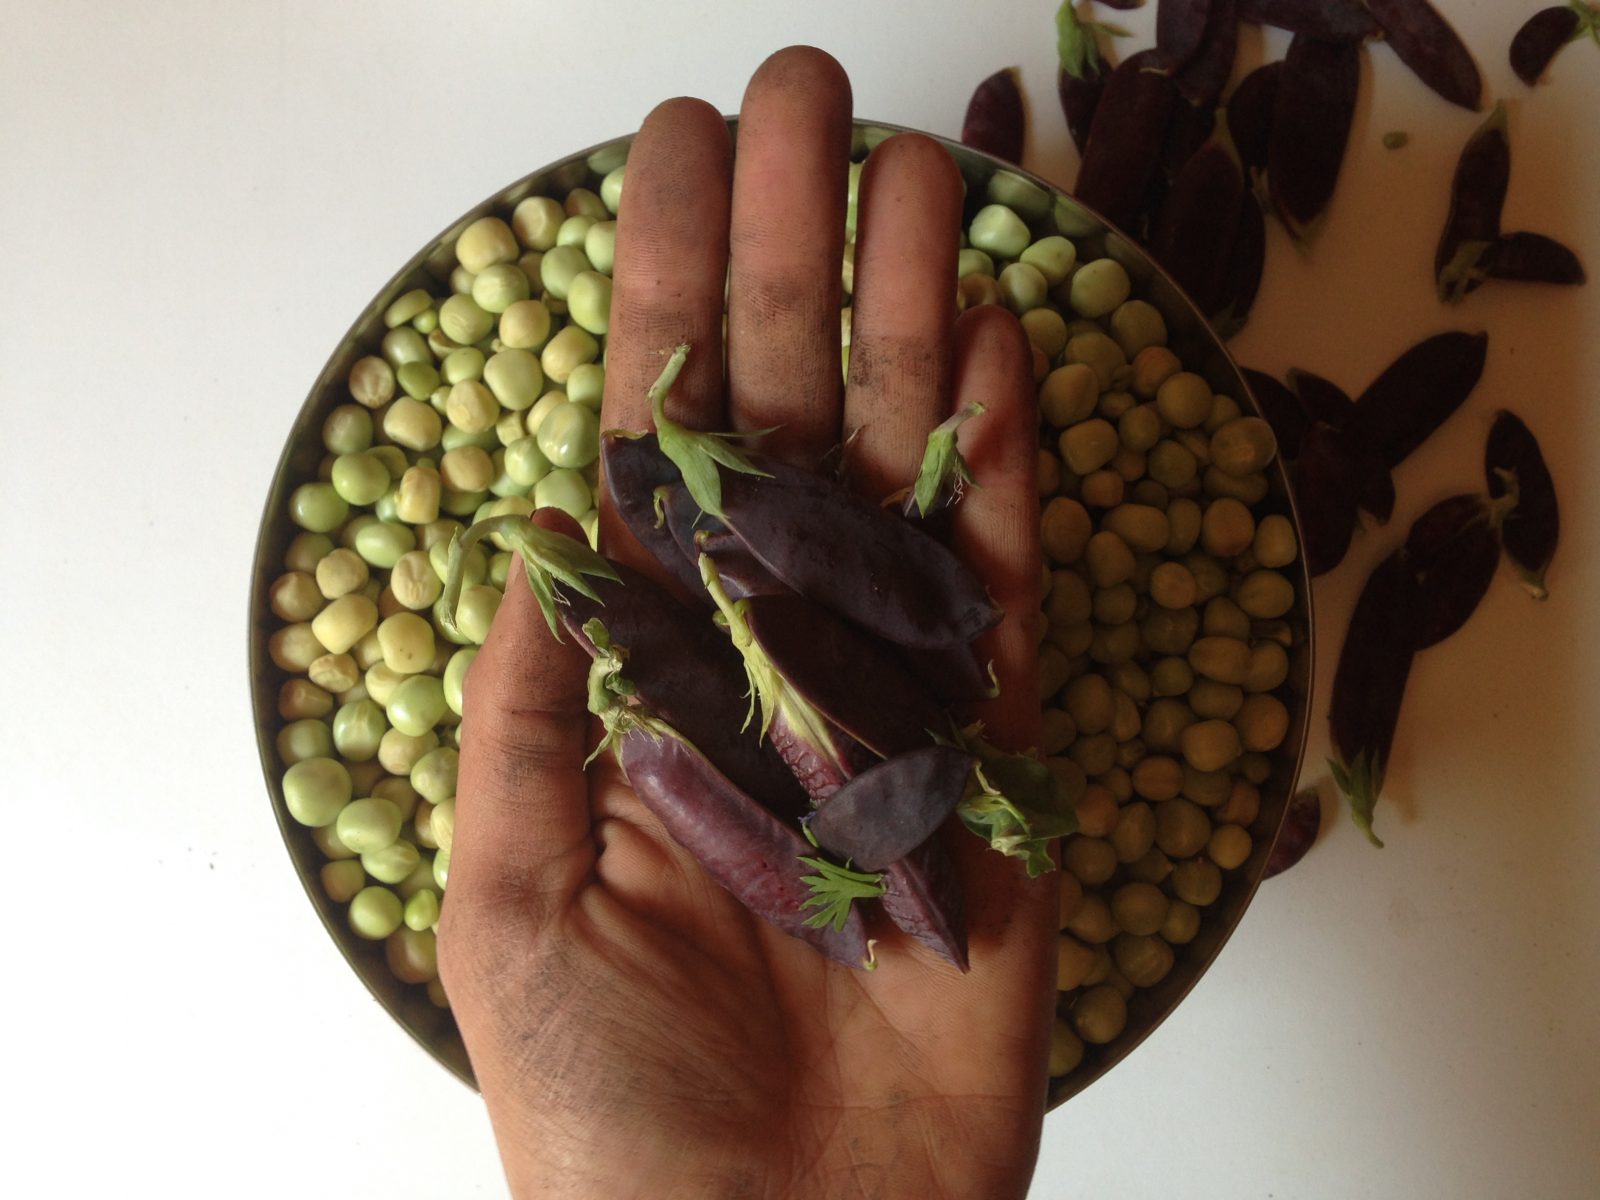  What? Purple peas? 